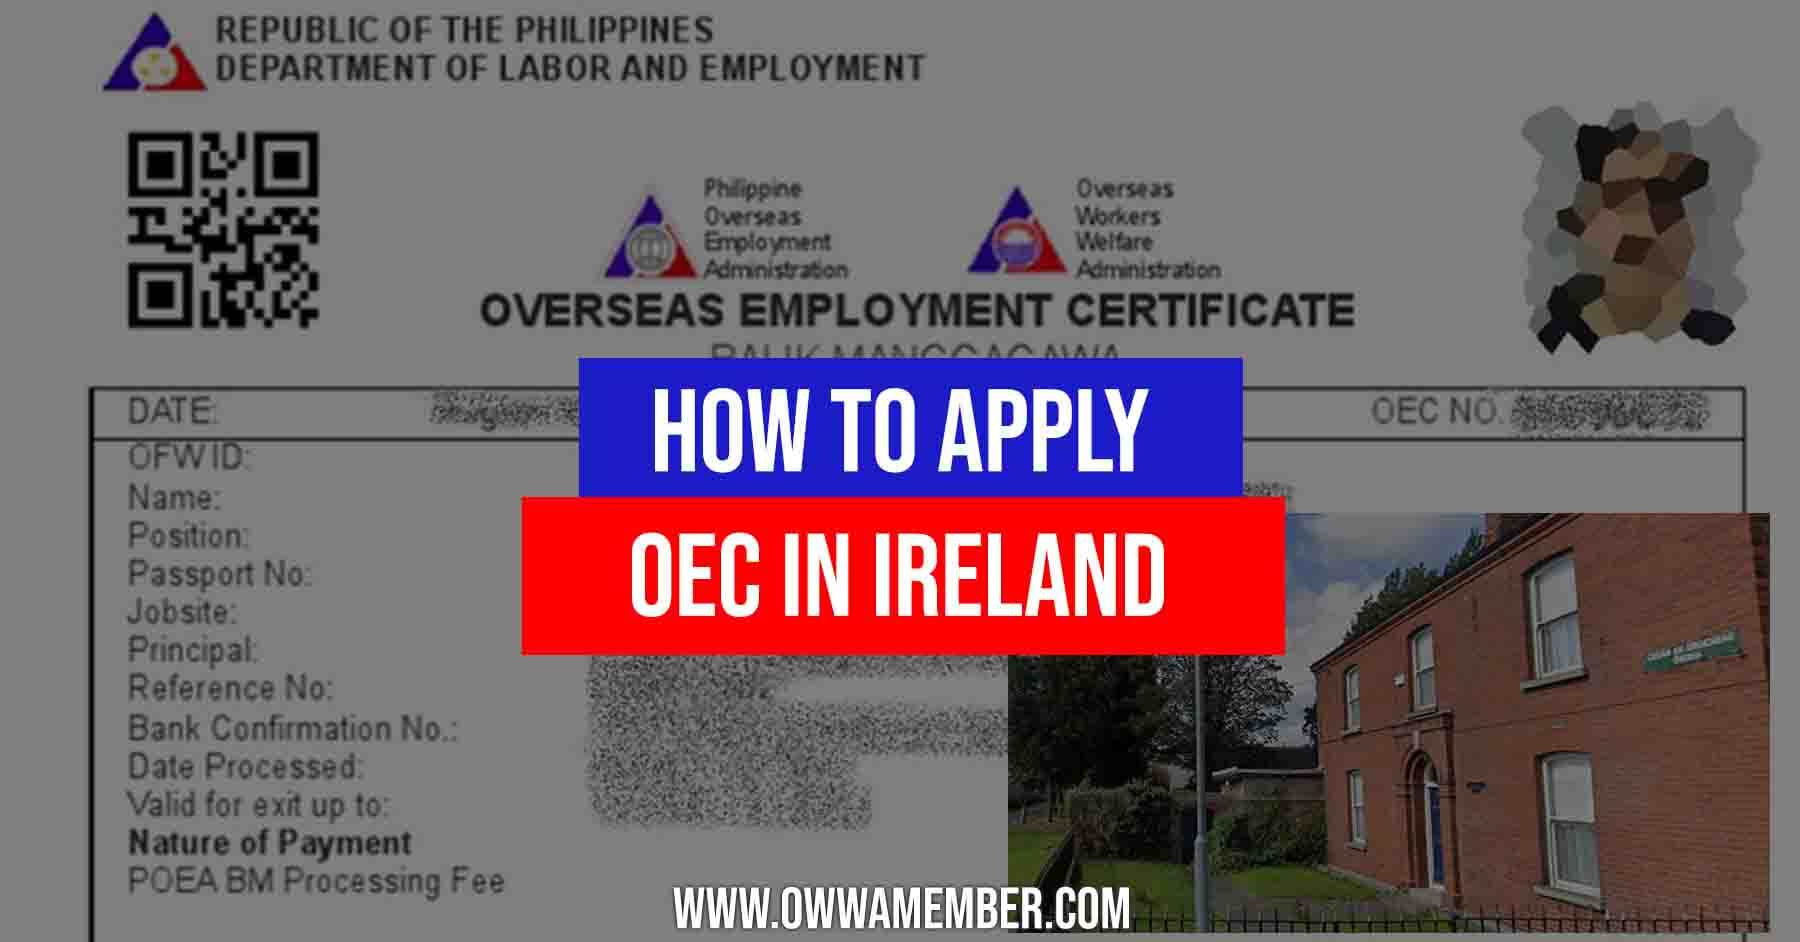 how to apply oec balik manggagawa ireland overseas employment certificate ofws